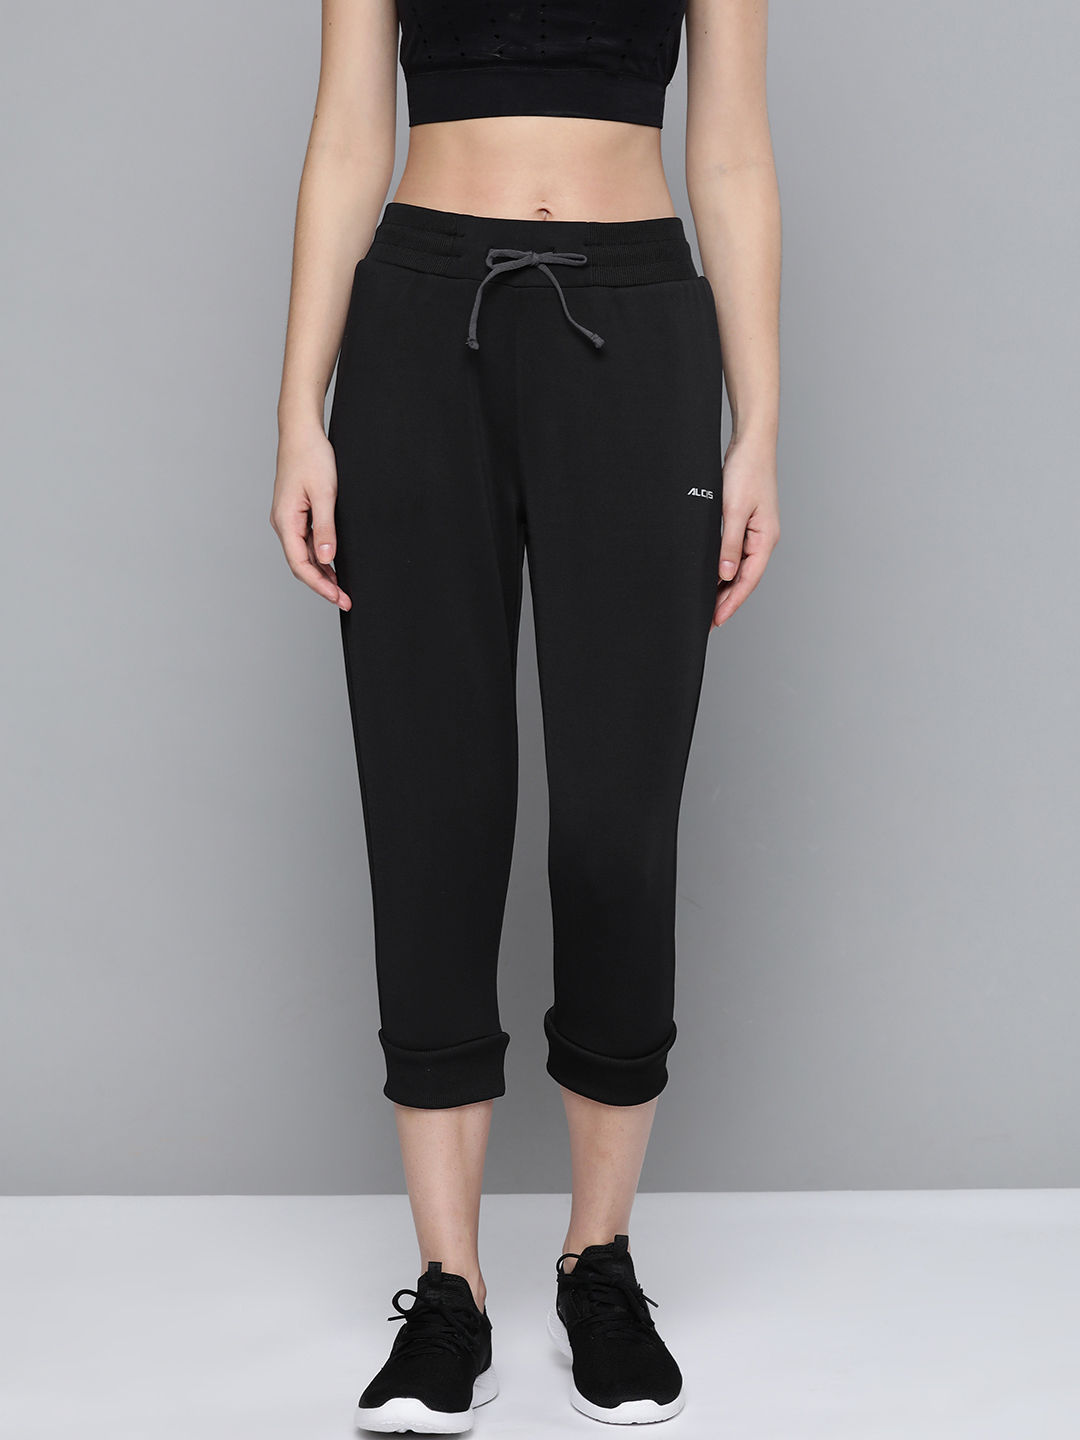 Buy MYO Cotton Capri | Three Fourth Pants for Women Combo Pack of 3 Size  XXL Maroon,Mustard,White at Amazon.in